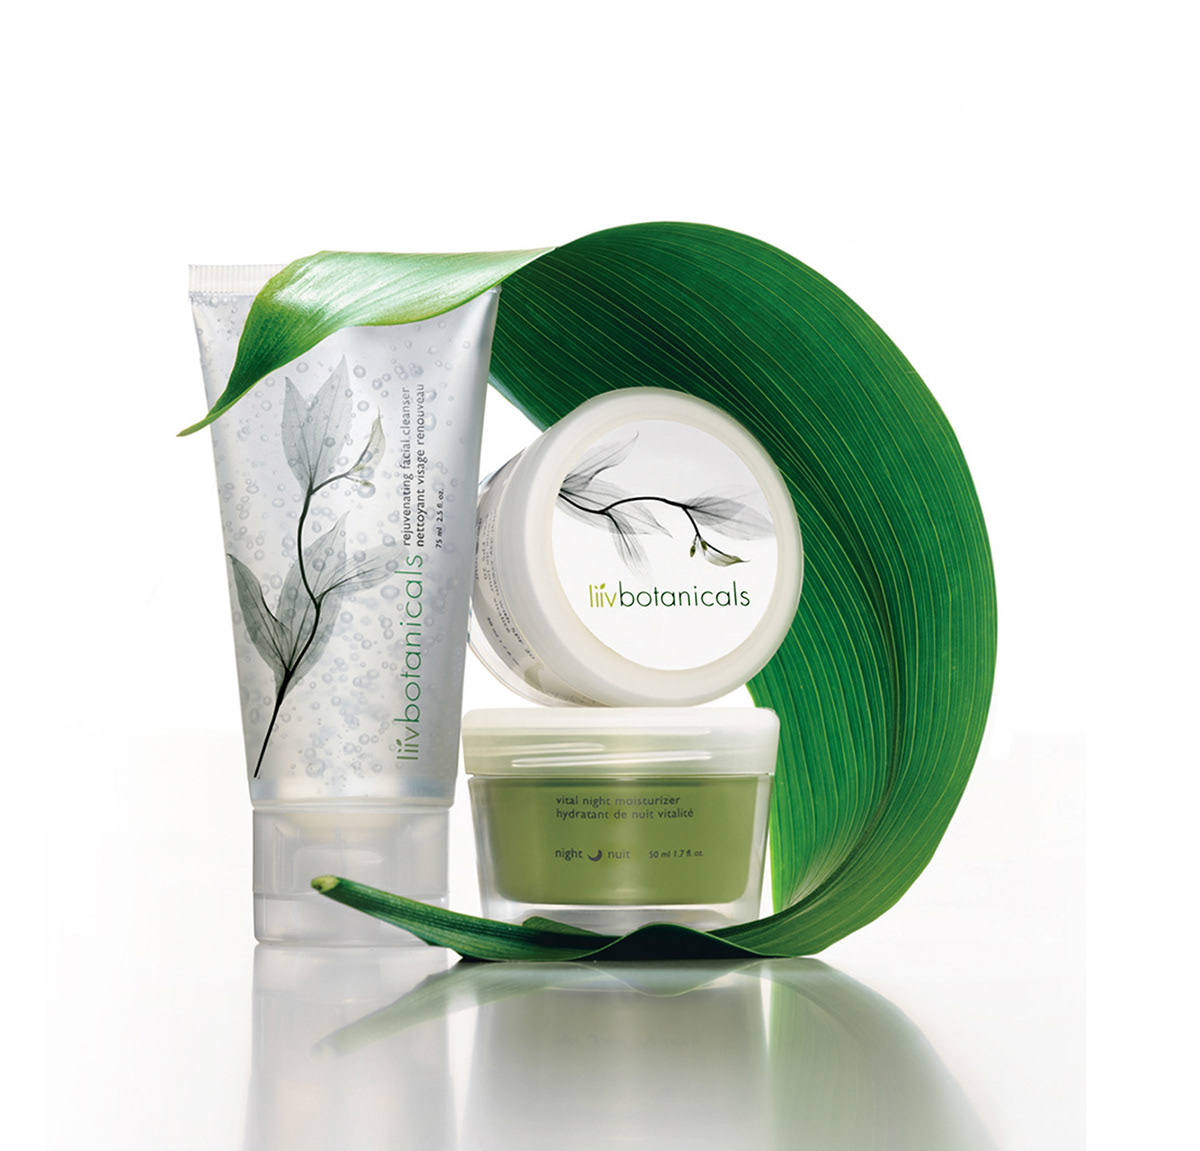 Liiv Botanicals packaging design cpg skin care beauty